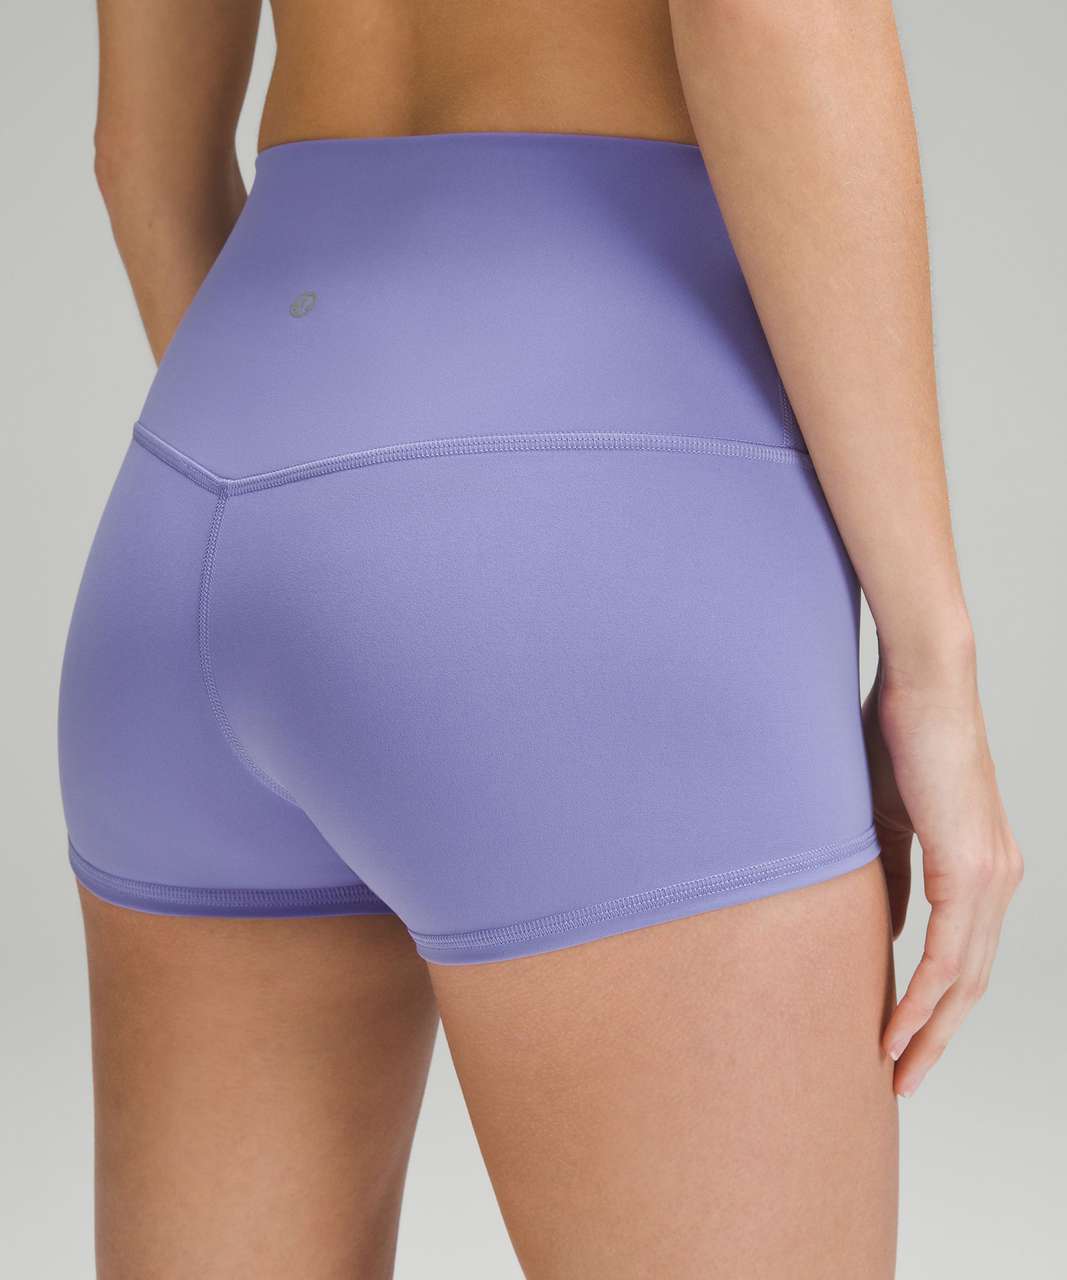 ❤️ NWT Lululemon Align Short HR 6 IN - Size 6 Dark Lavender Purple Yoga  Shorts